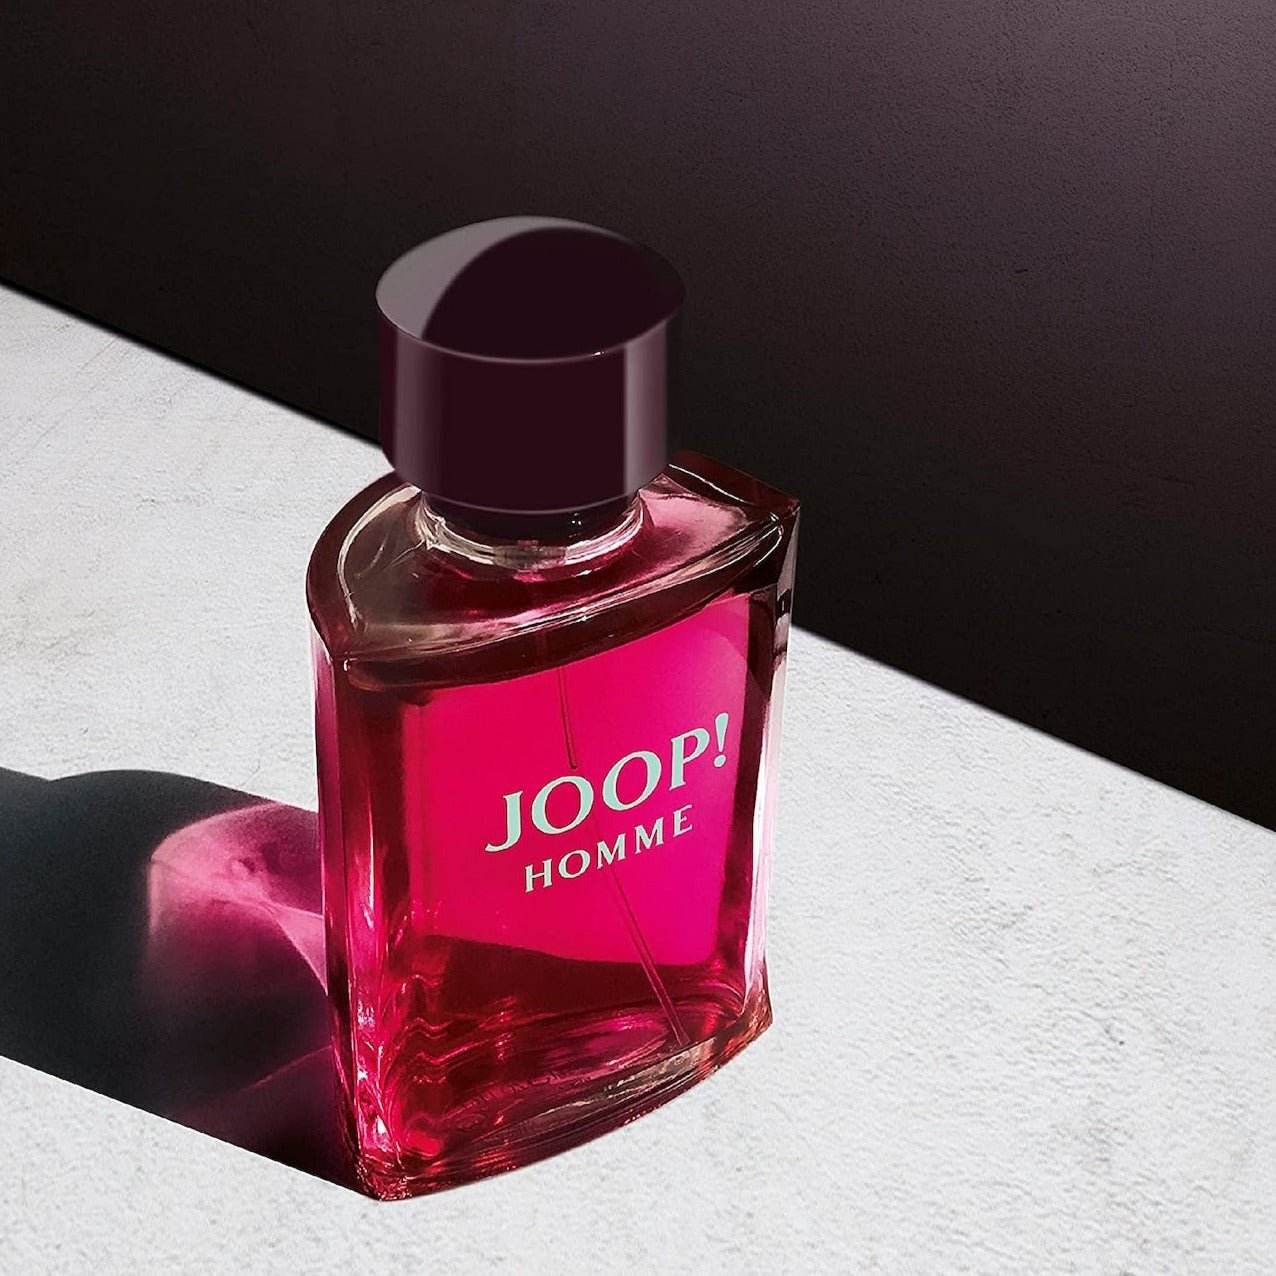 Joop! Homme EDT | My Perfume Shop Australia